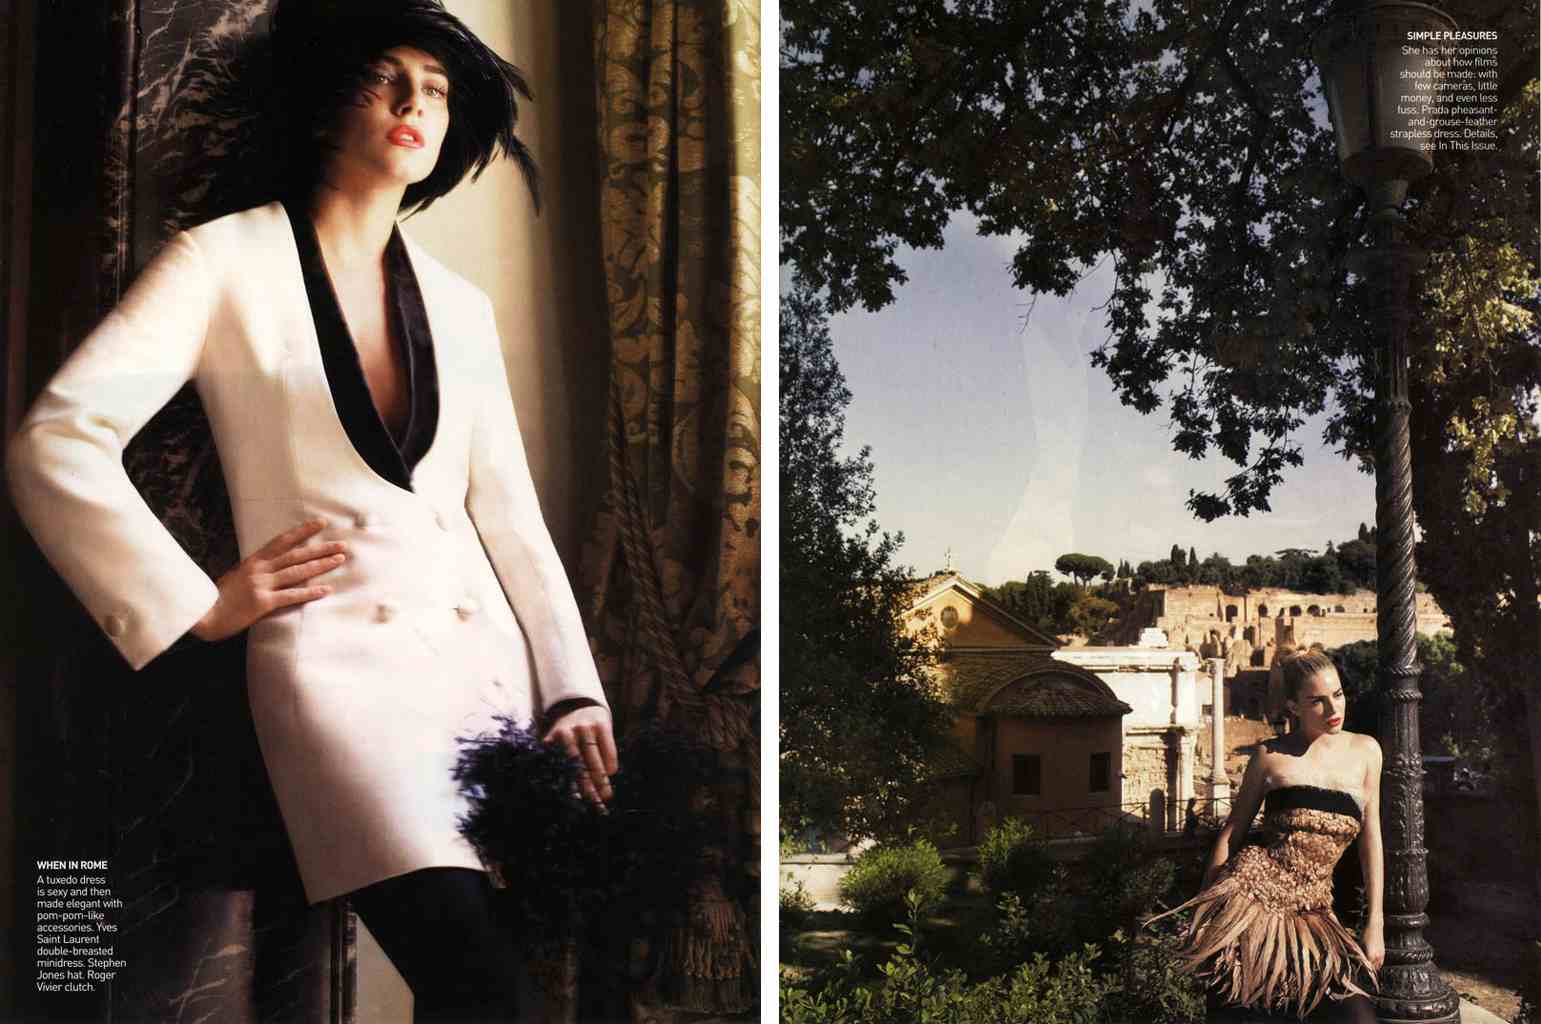 VOGUE USA - 2006
Photographer: Mario Testino
Model: Sienna Miller - Riccardo Scamarcio
Stylist: Tonne Goodman
Location: Rome - Italy